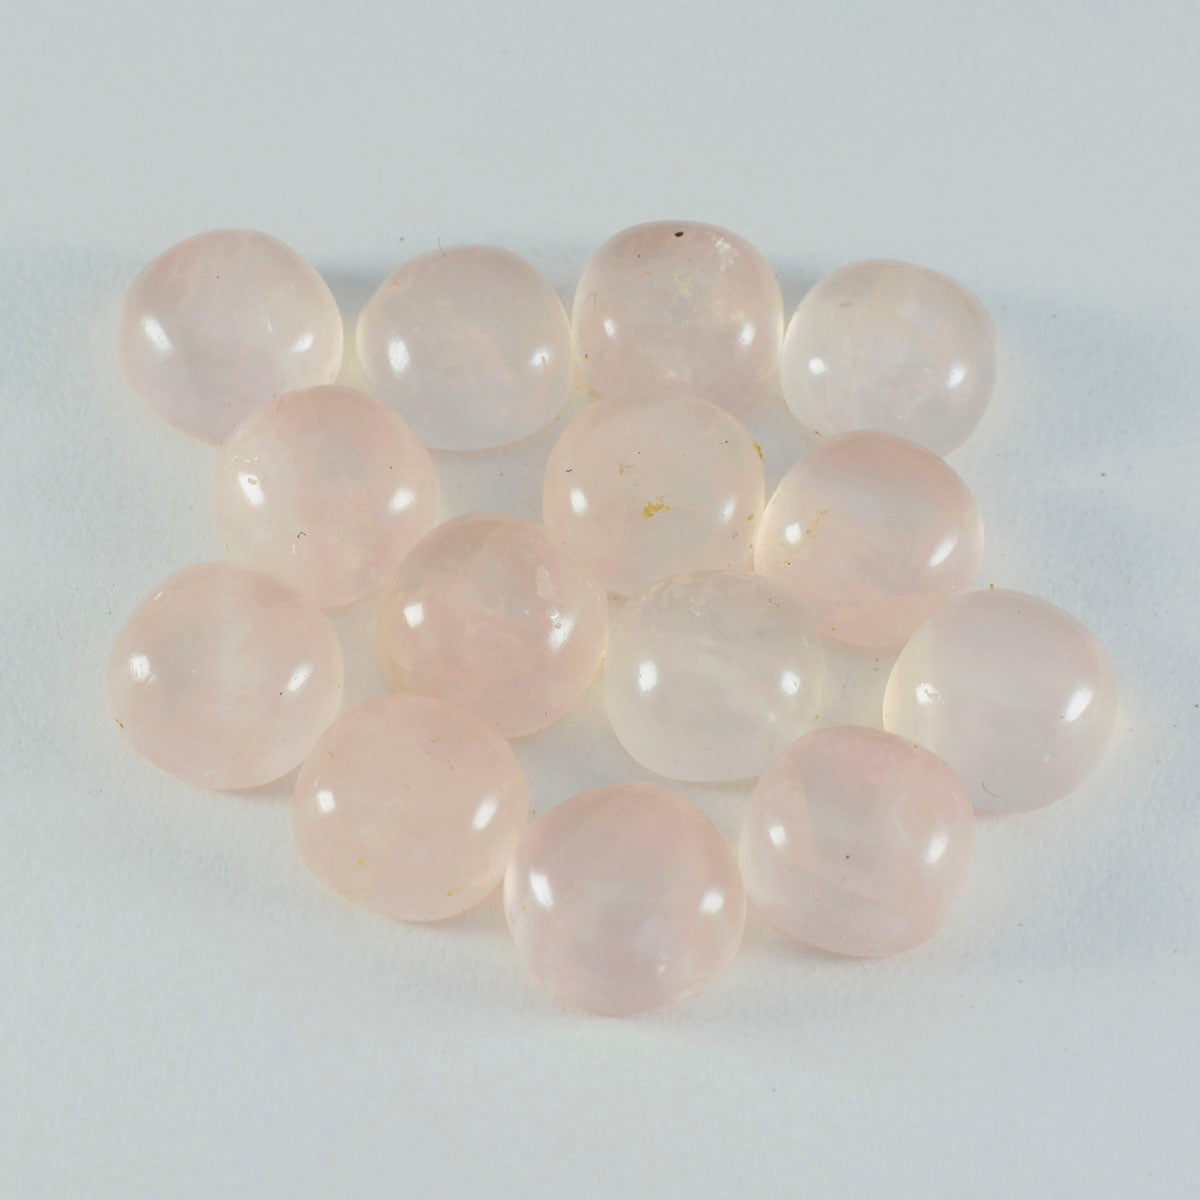 Кабошон из розового кварца riyogems, 1 шт., 10x10 мм, в форме подушки, красивое качество, свободный камень